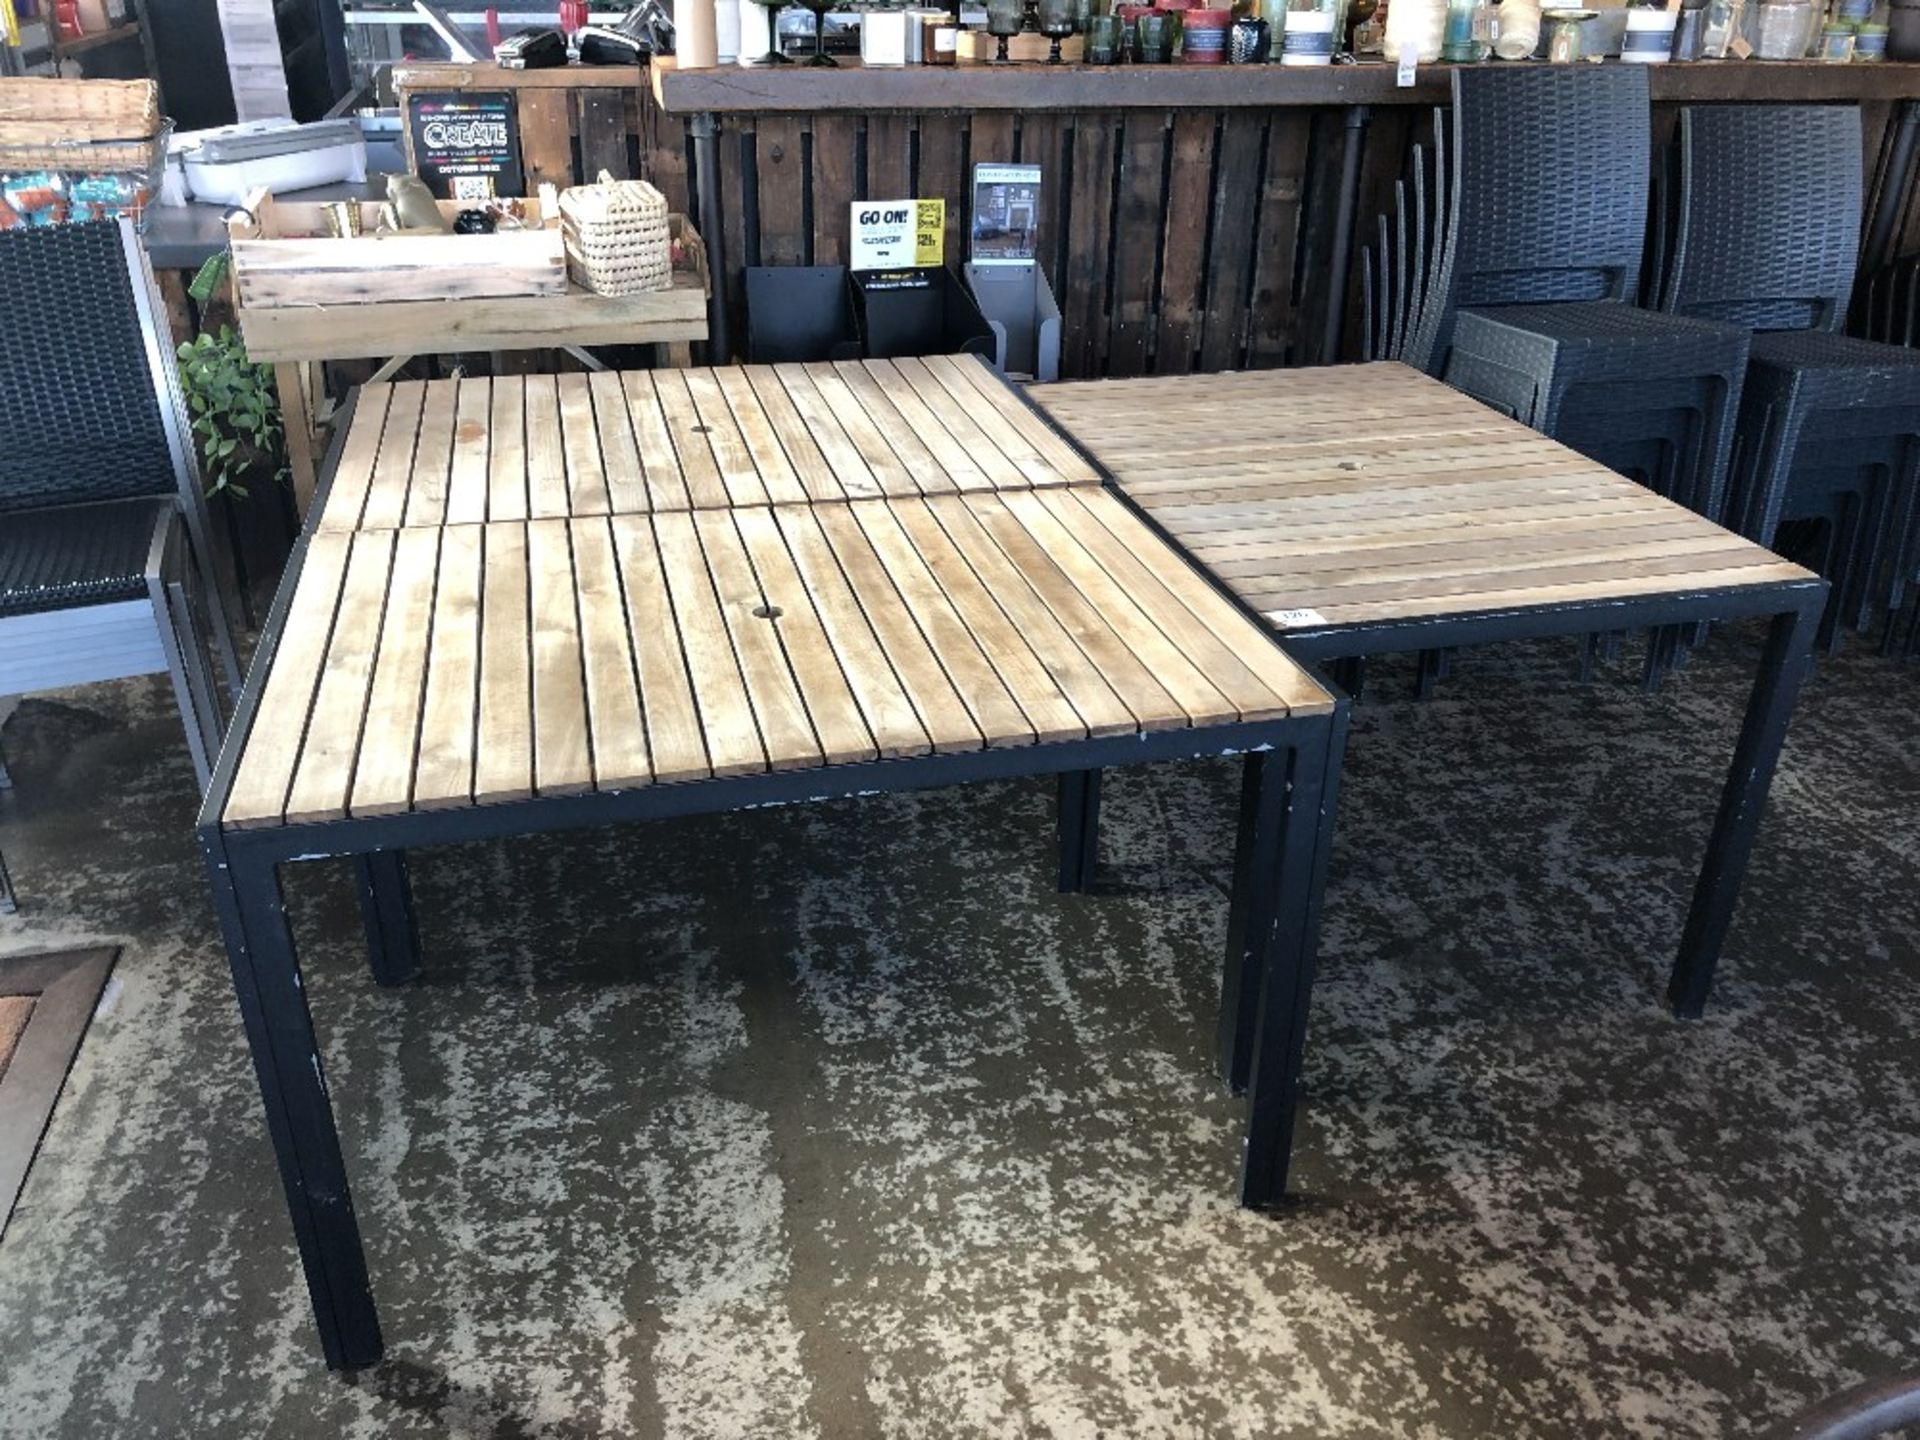 (3) Outdoor Wooden Slatted / Steel Base Rectangular Tables